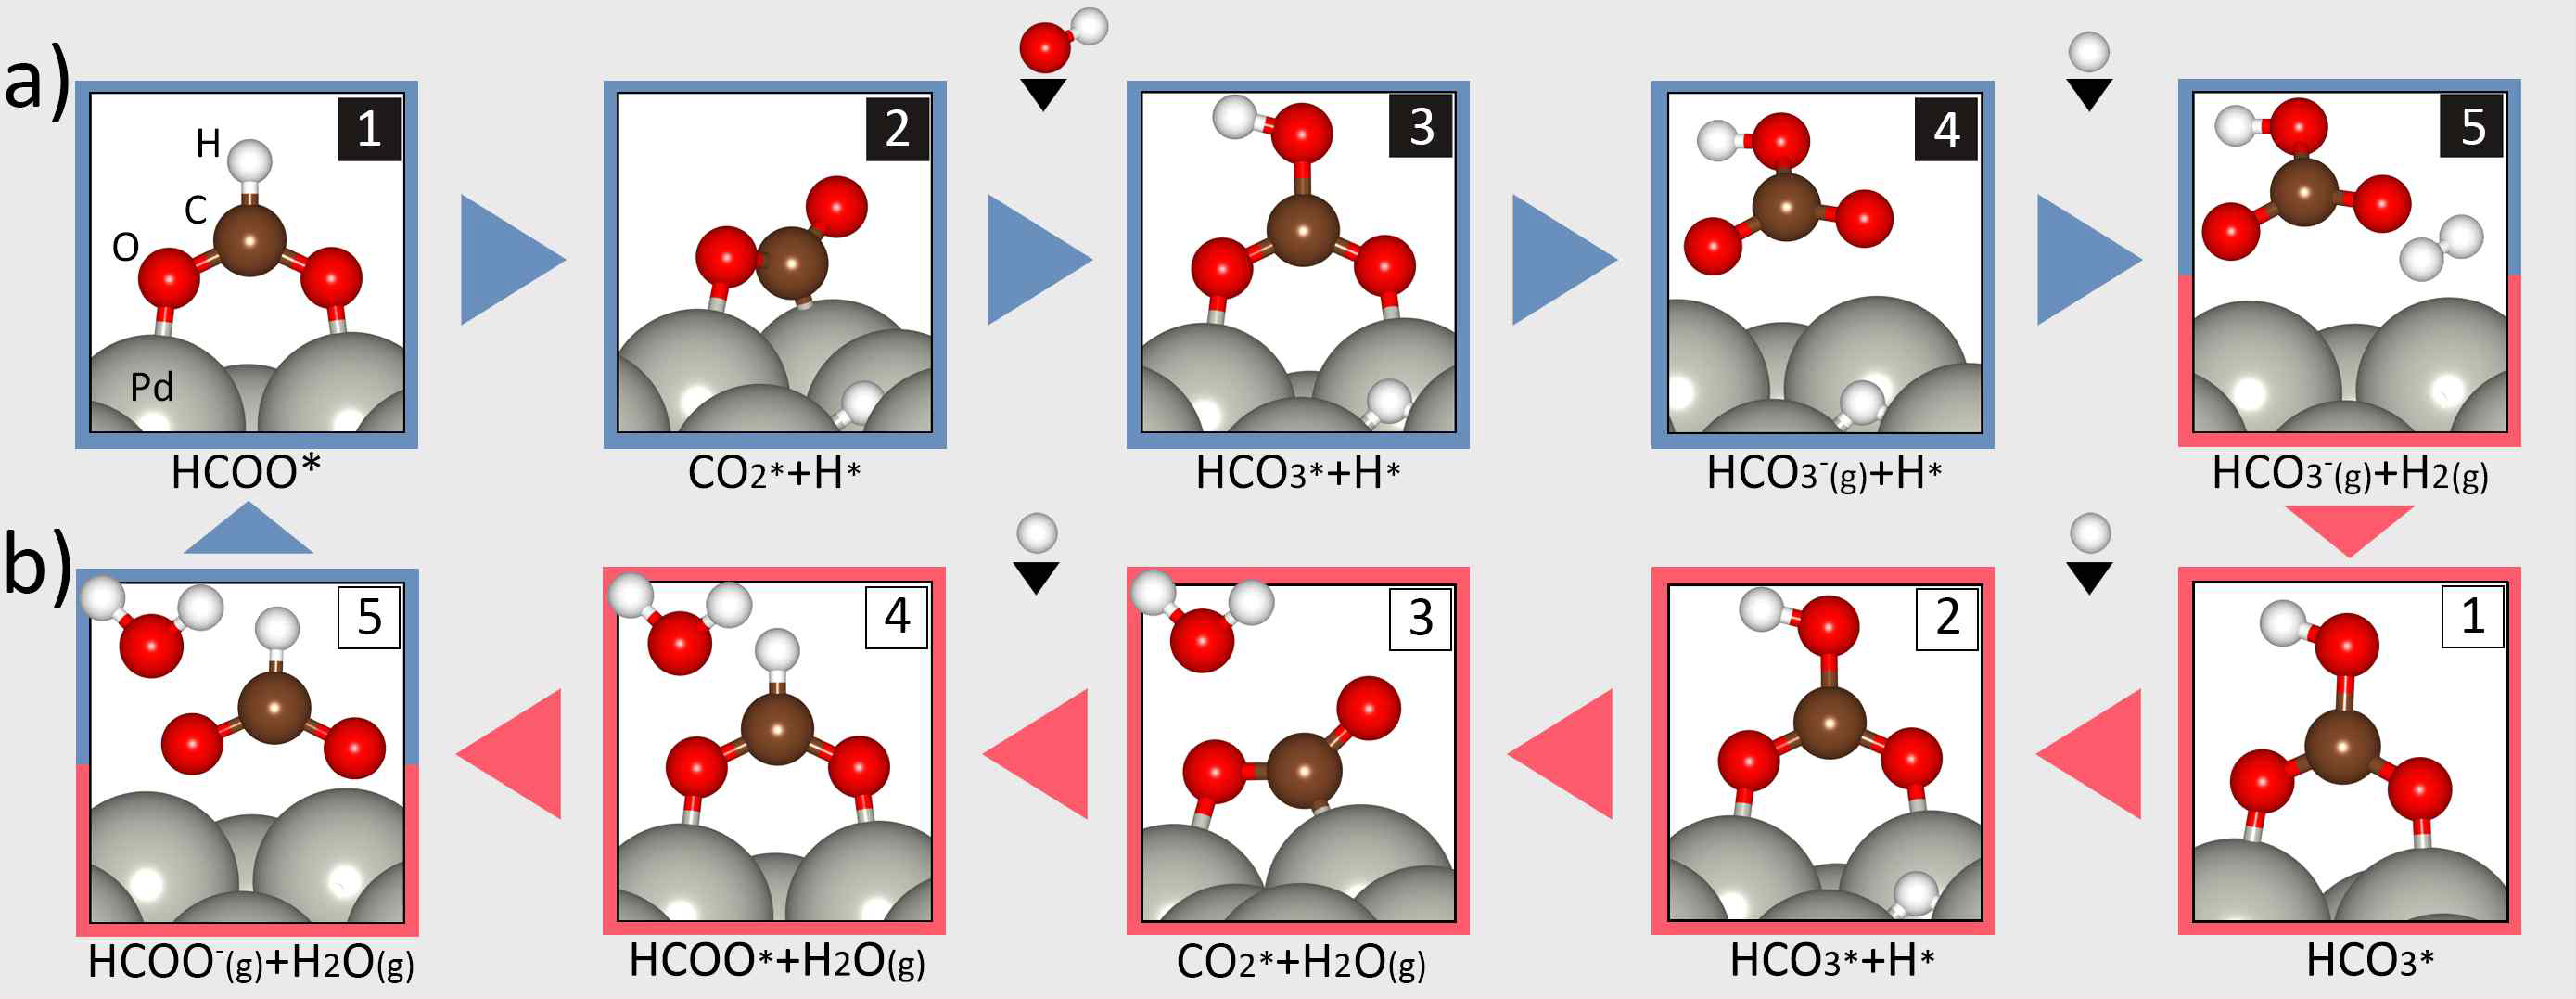 HCOO-/HCO3- reversible reactions